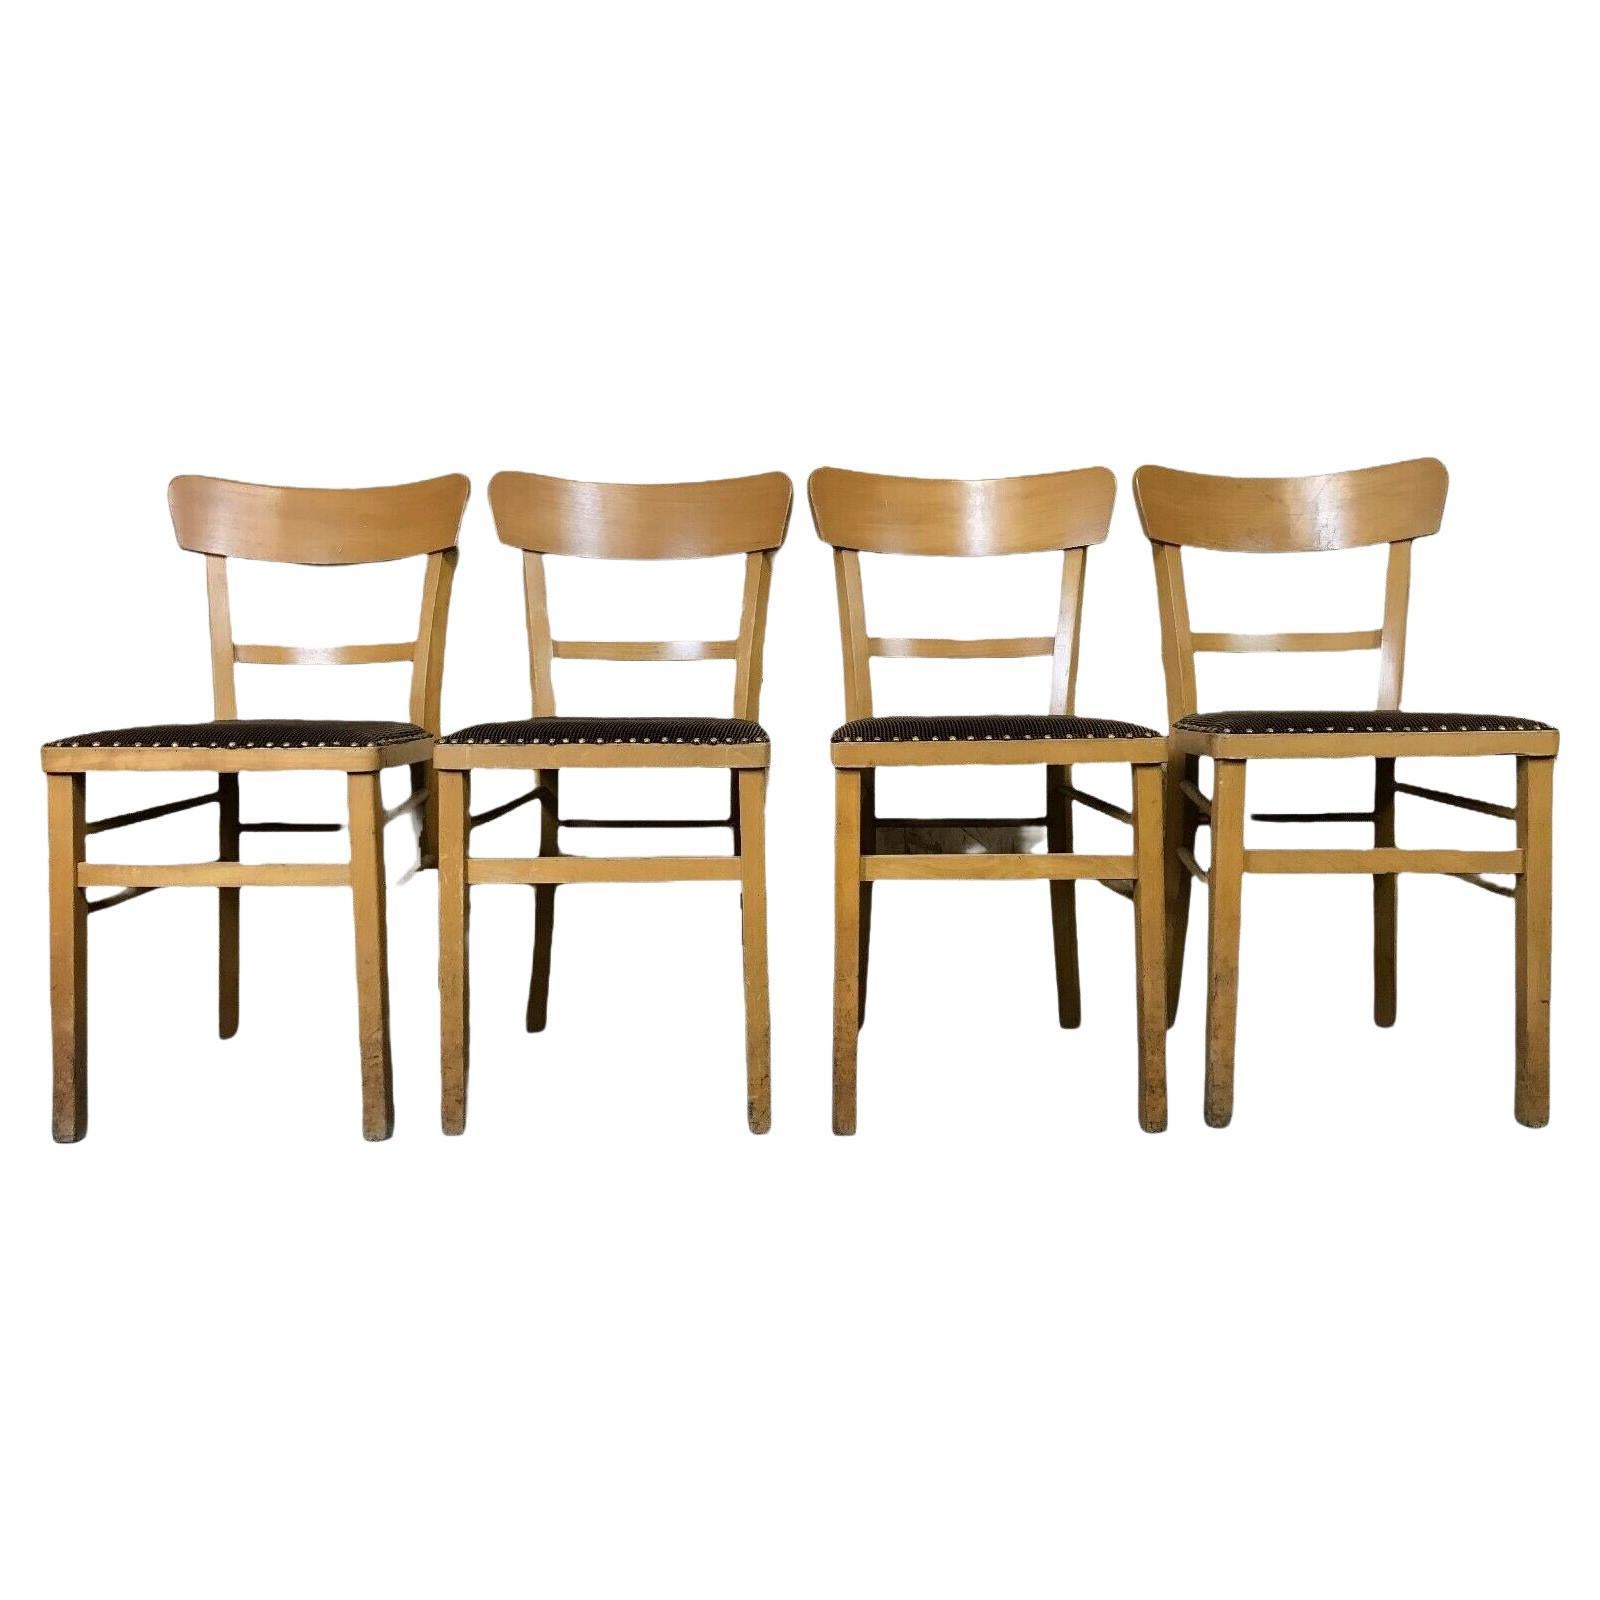 4x 50s 60s chair chairs Frankfurt chair Bauhaus Mid Century Design 